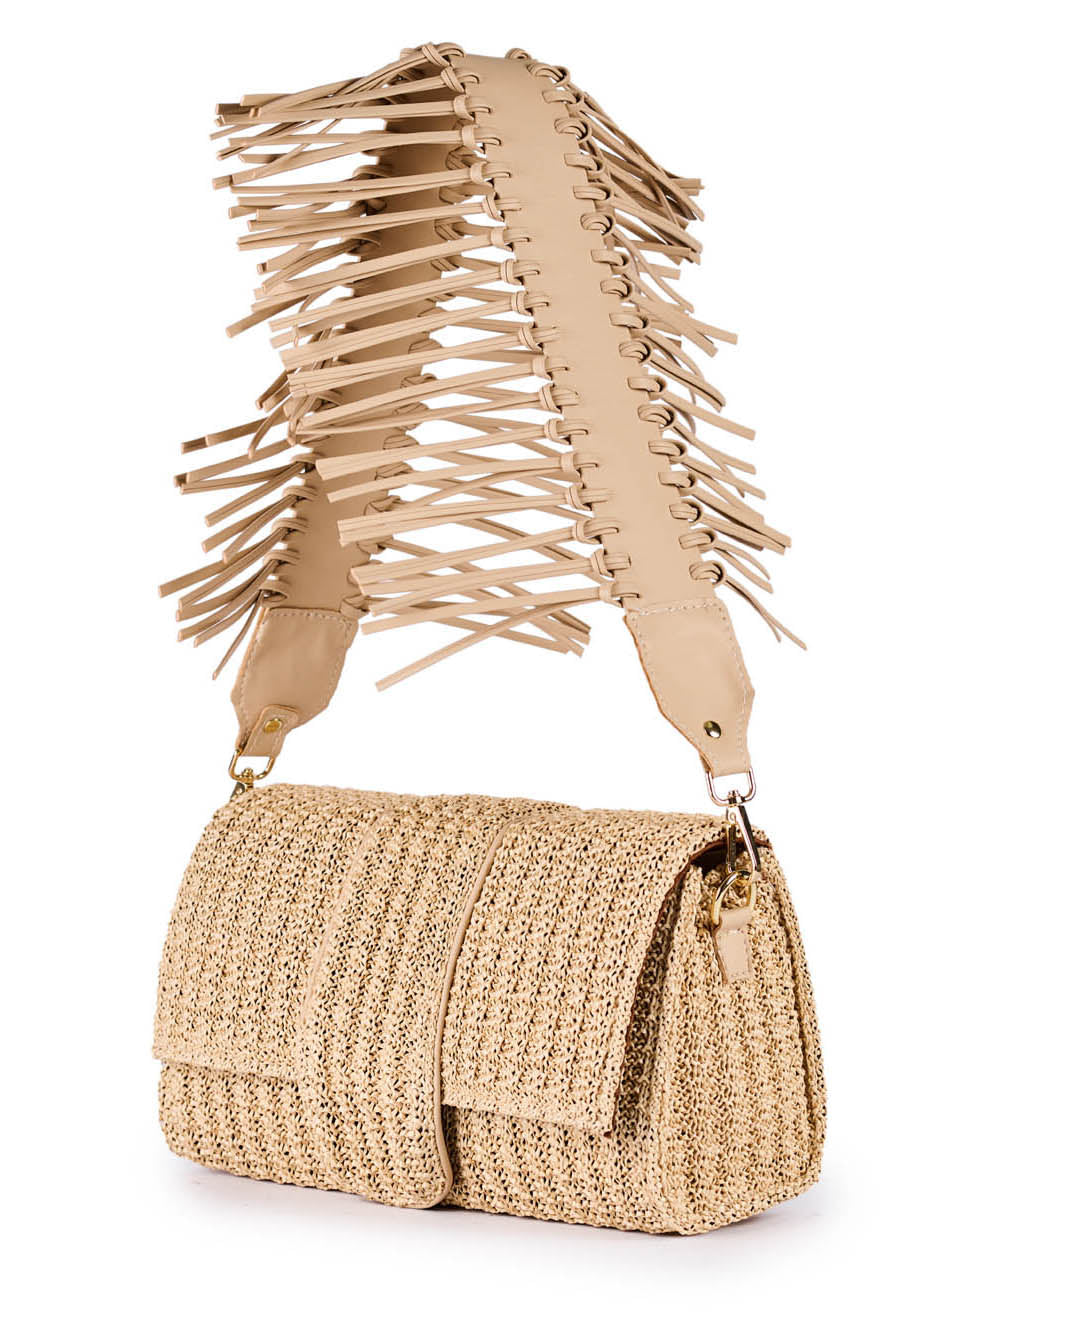 Beige woven handbag with decorative strap featuring interlaced tassels